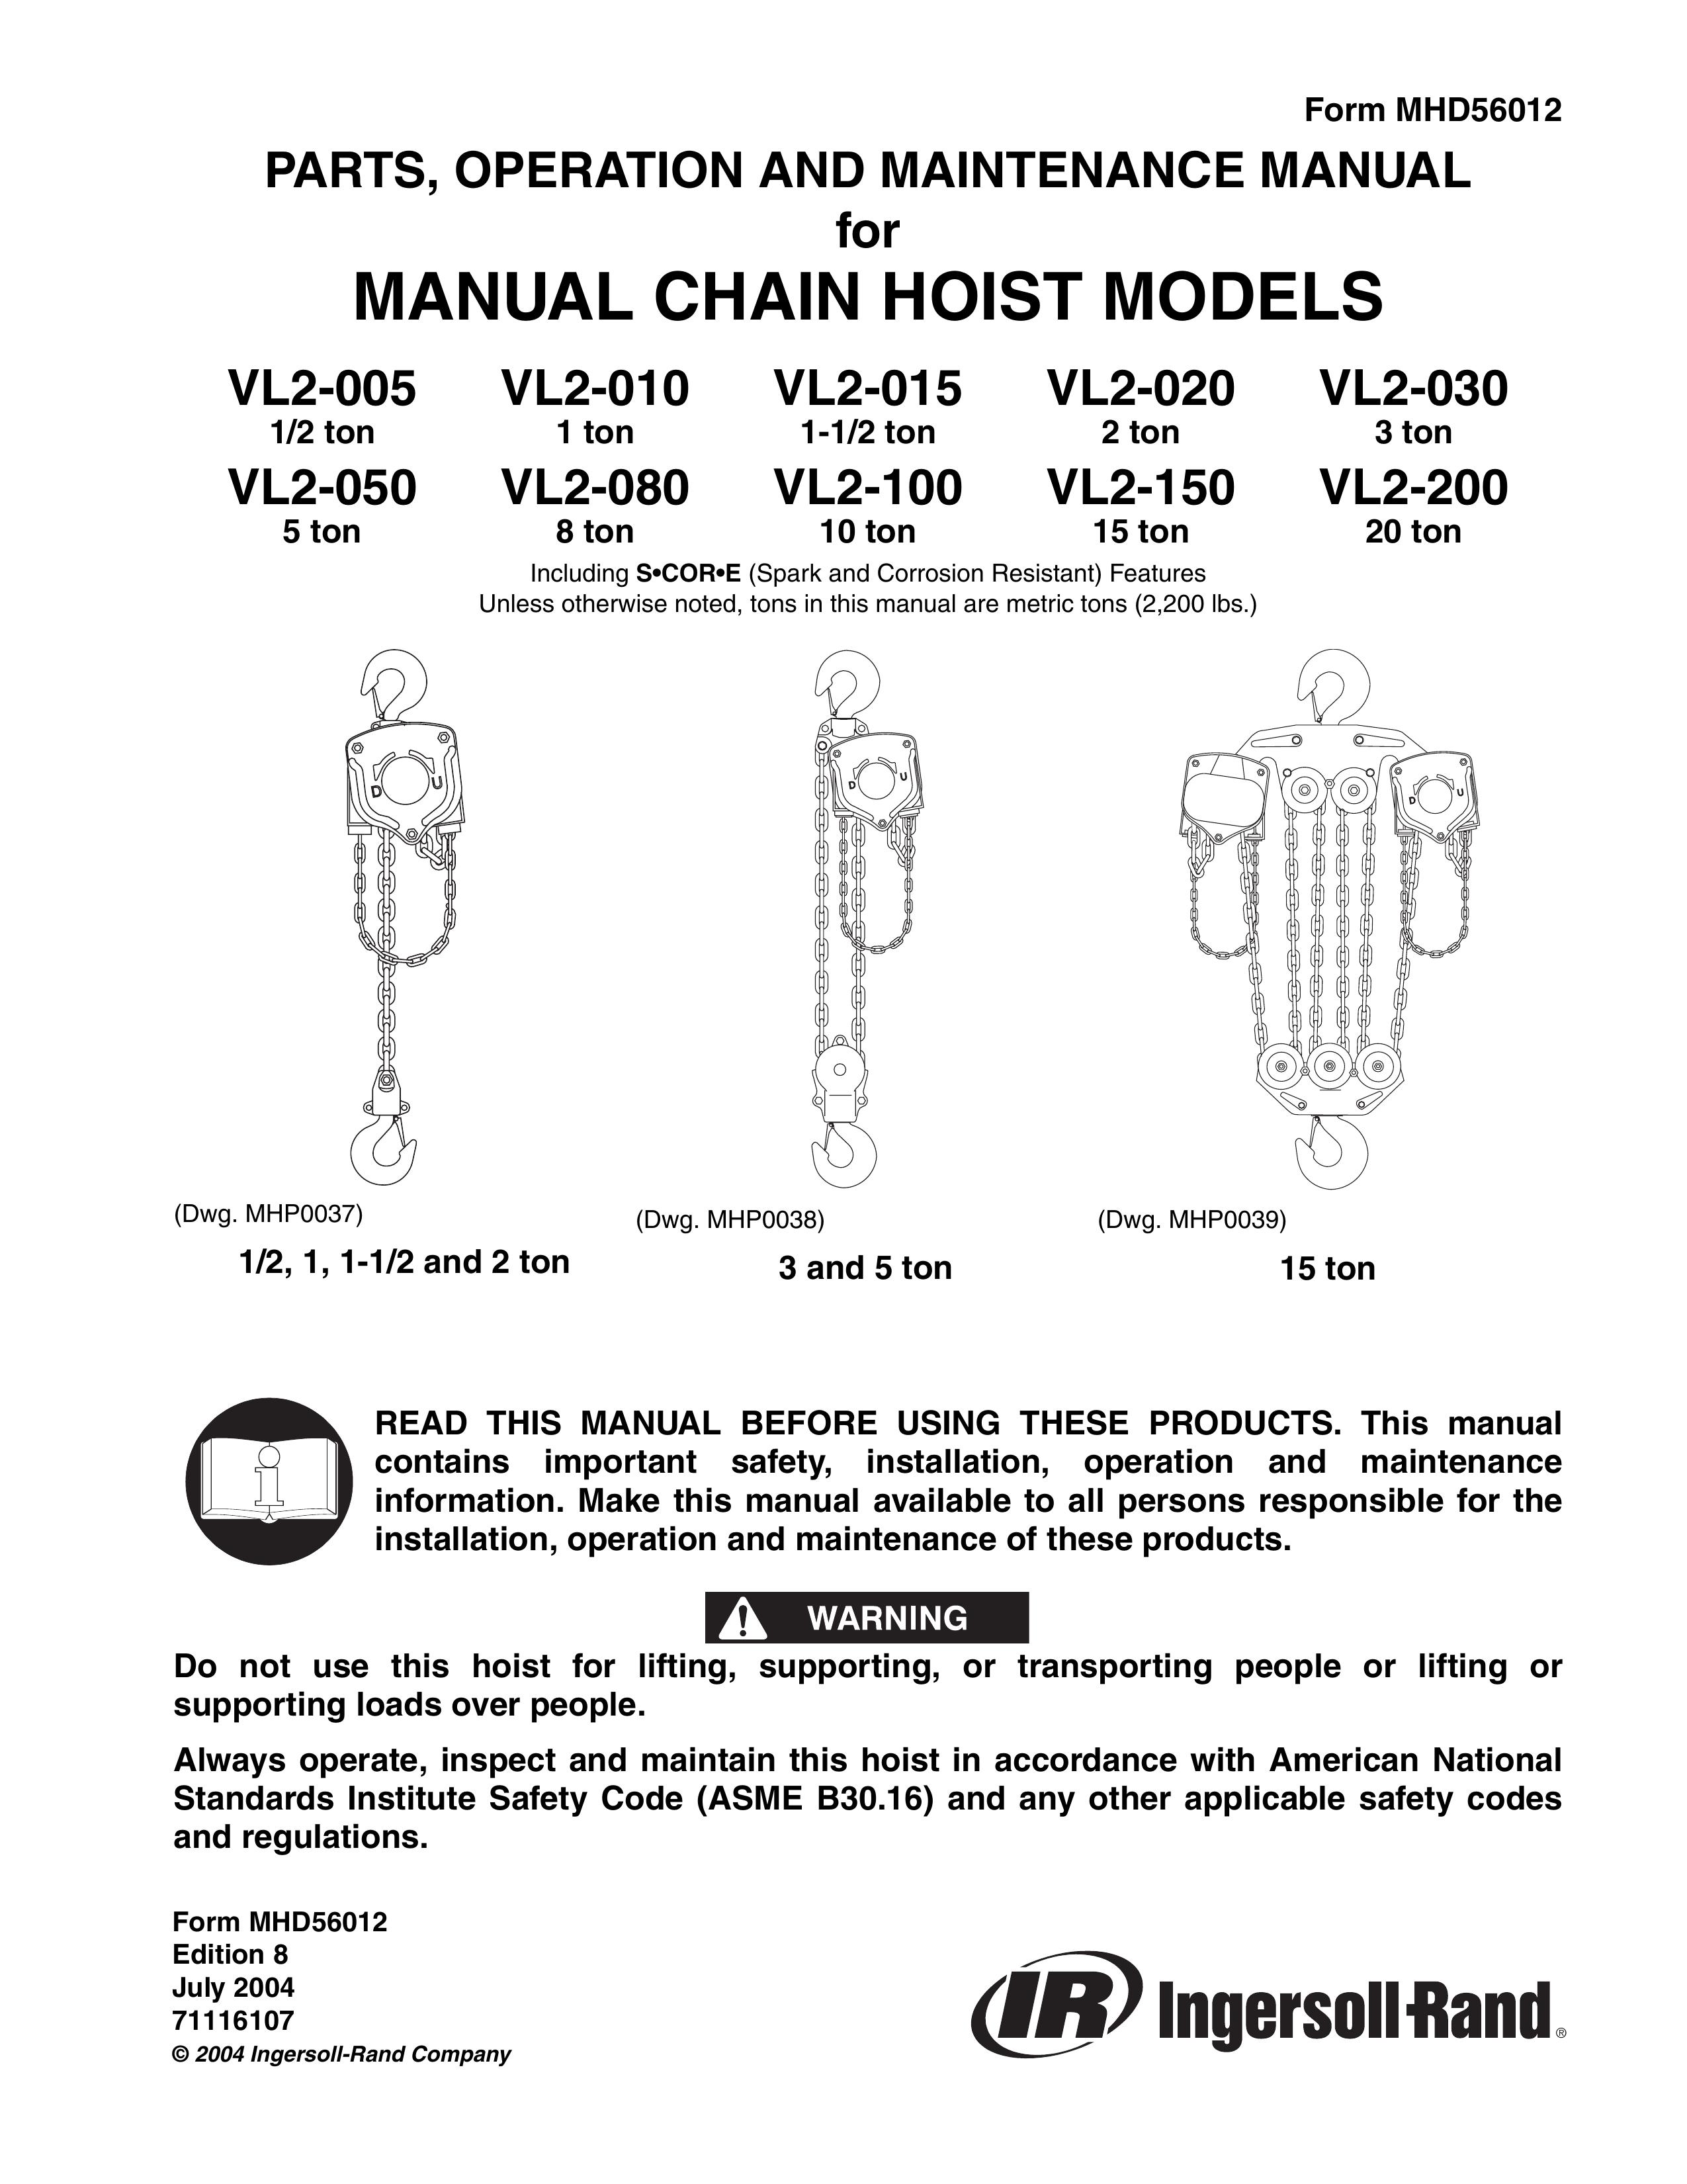 Ingersoll-Rand VL2-010 Digital Photo Keychain User Manual